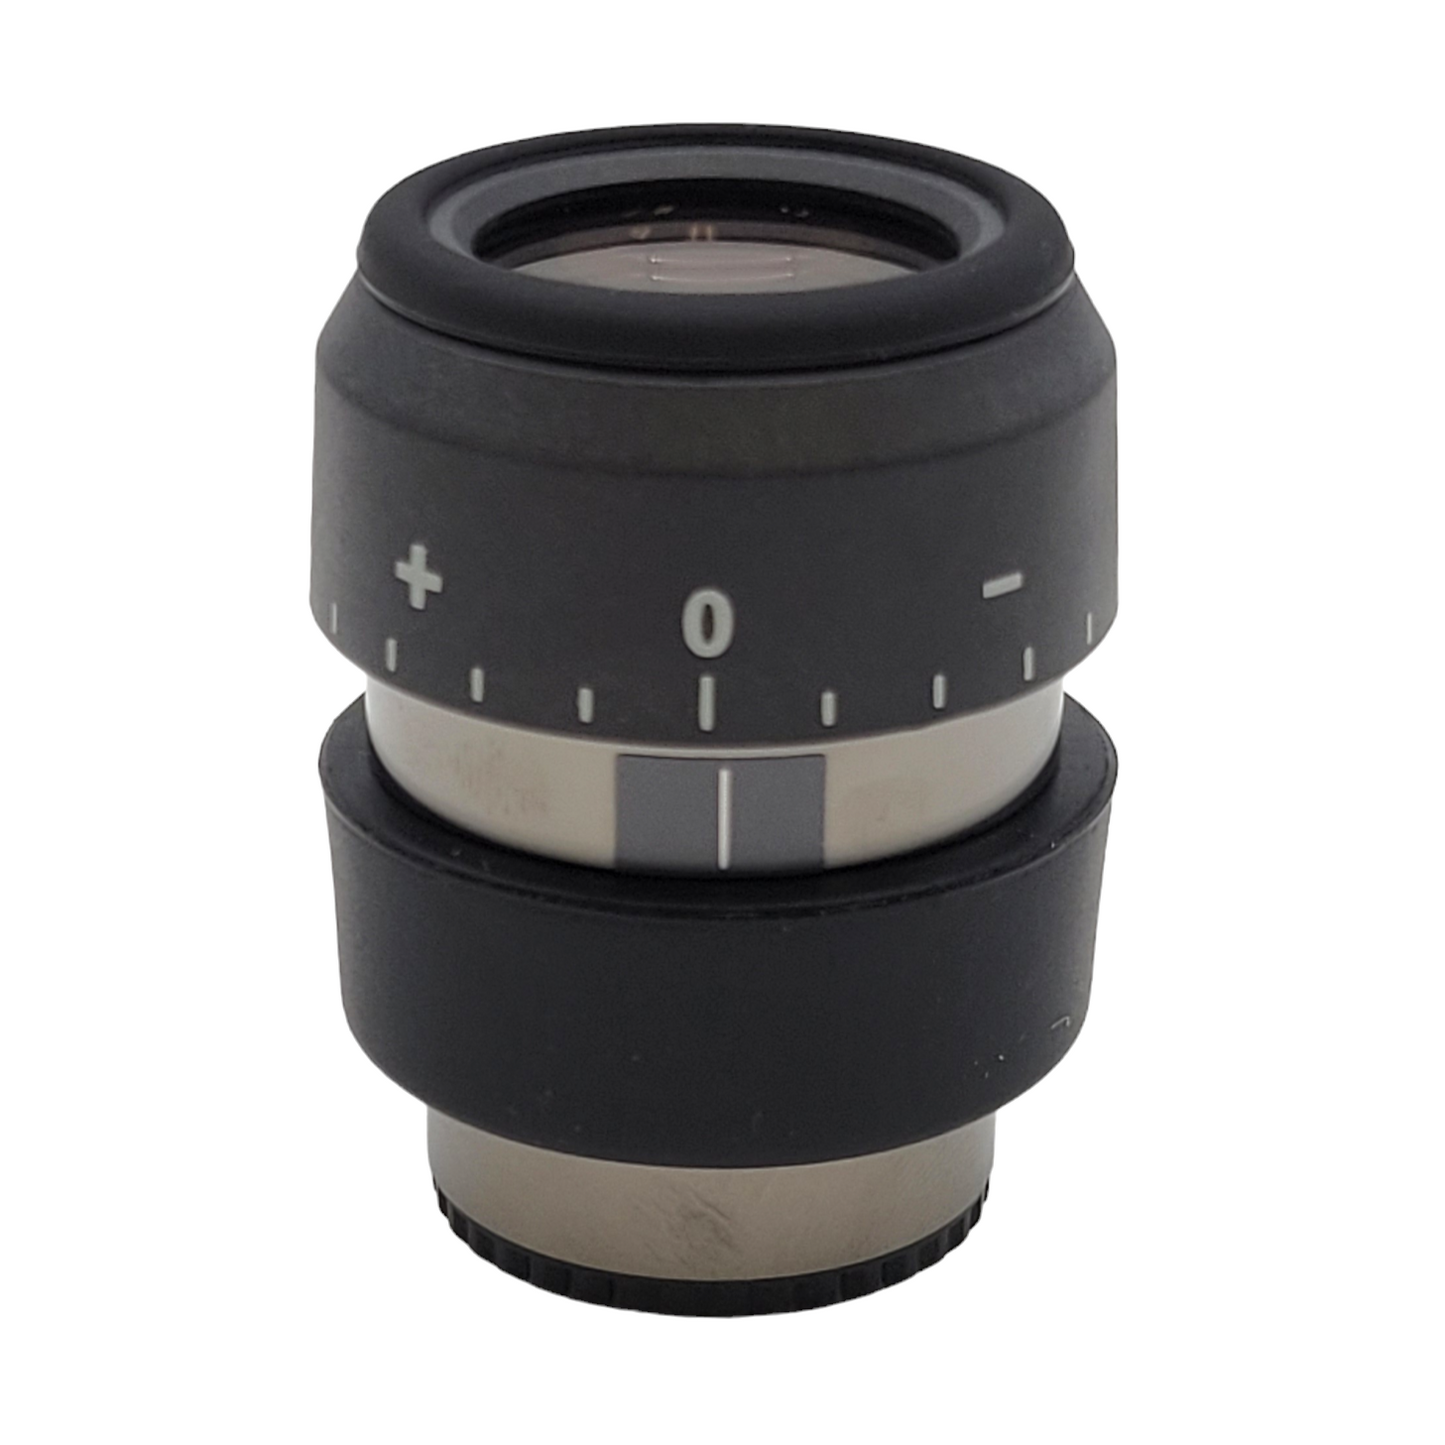 Nikon Stereo Microscope 10x Focusing Eyepiece C-W10xB/22 - microscopemarketplace